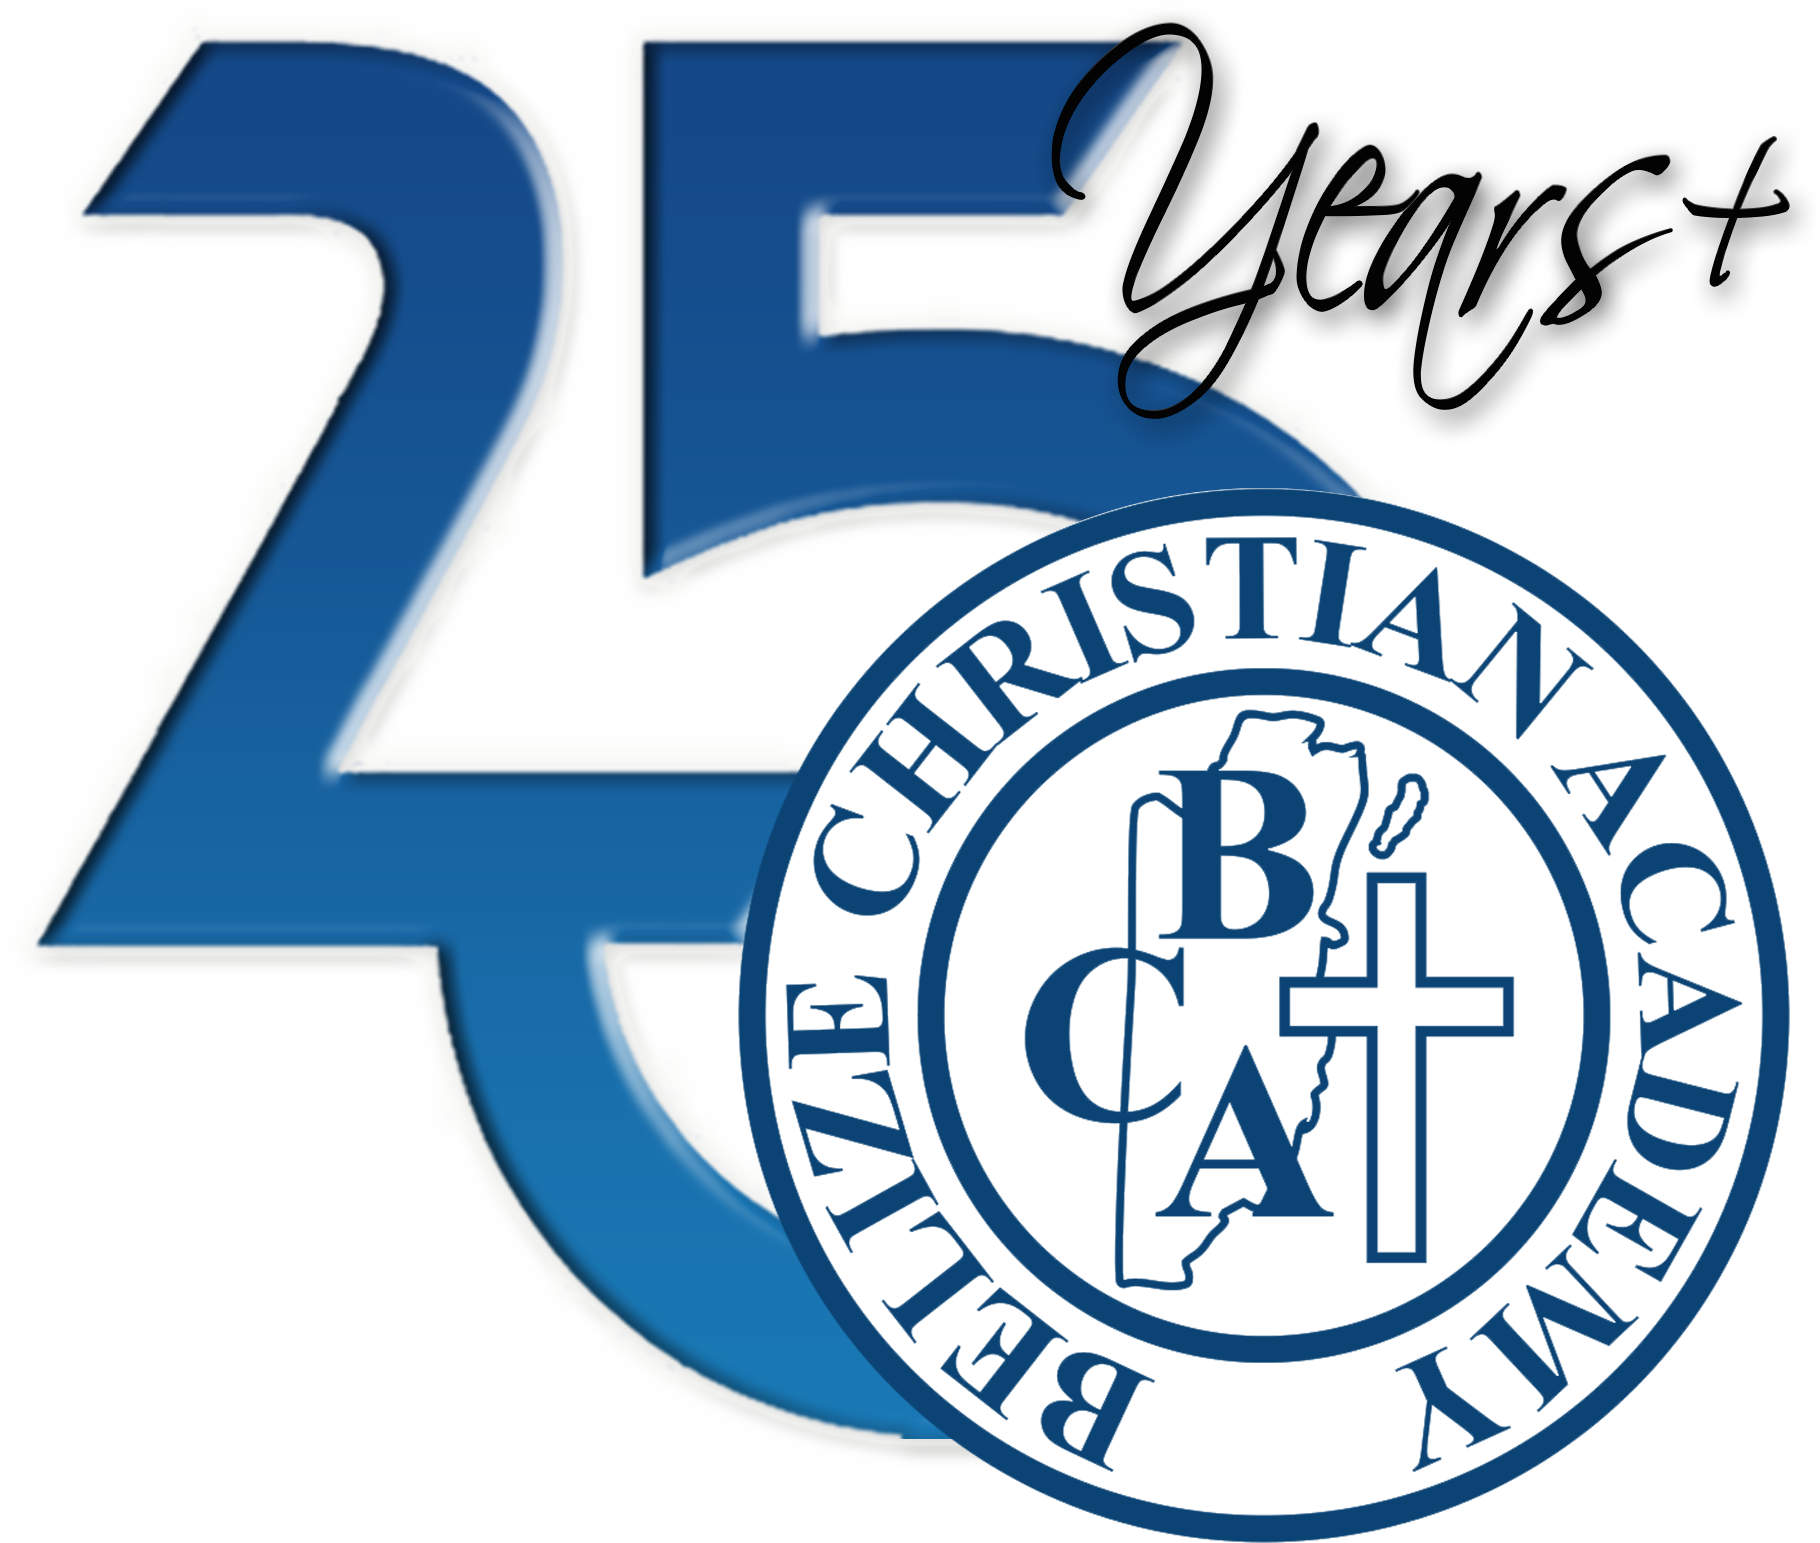 Belize Christian Academy